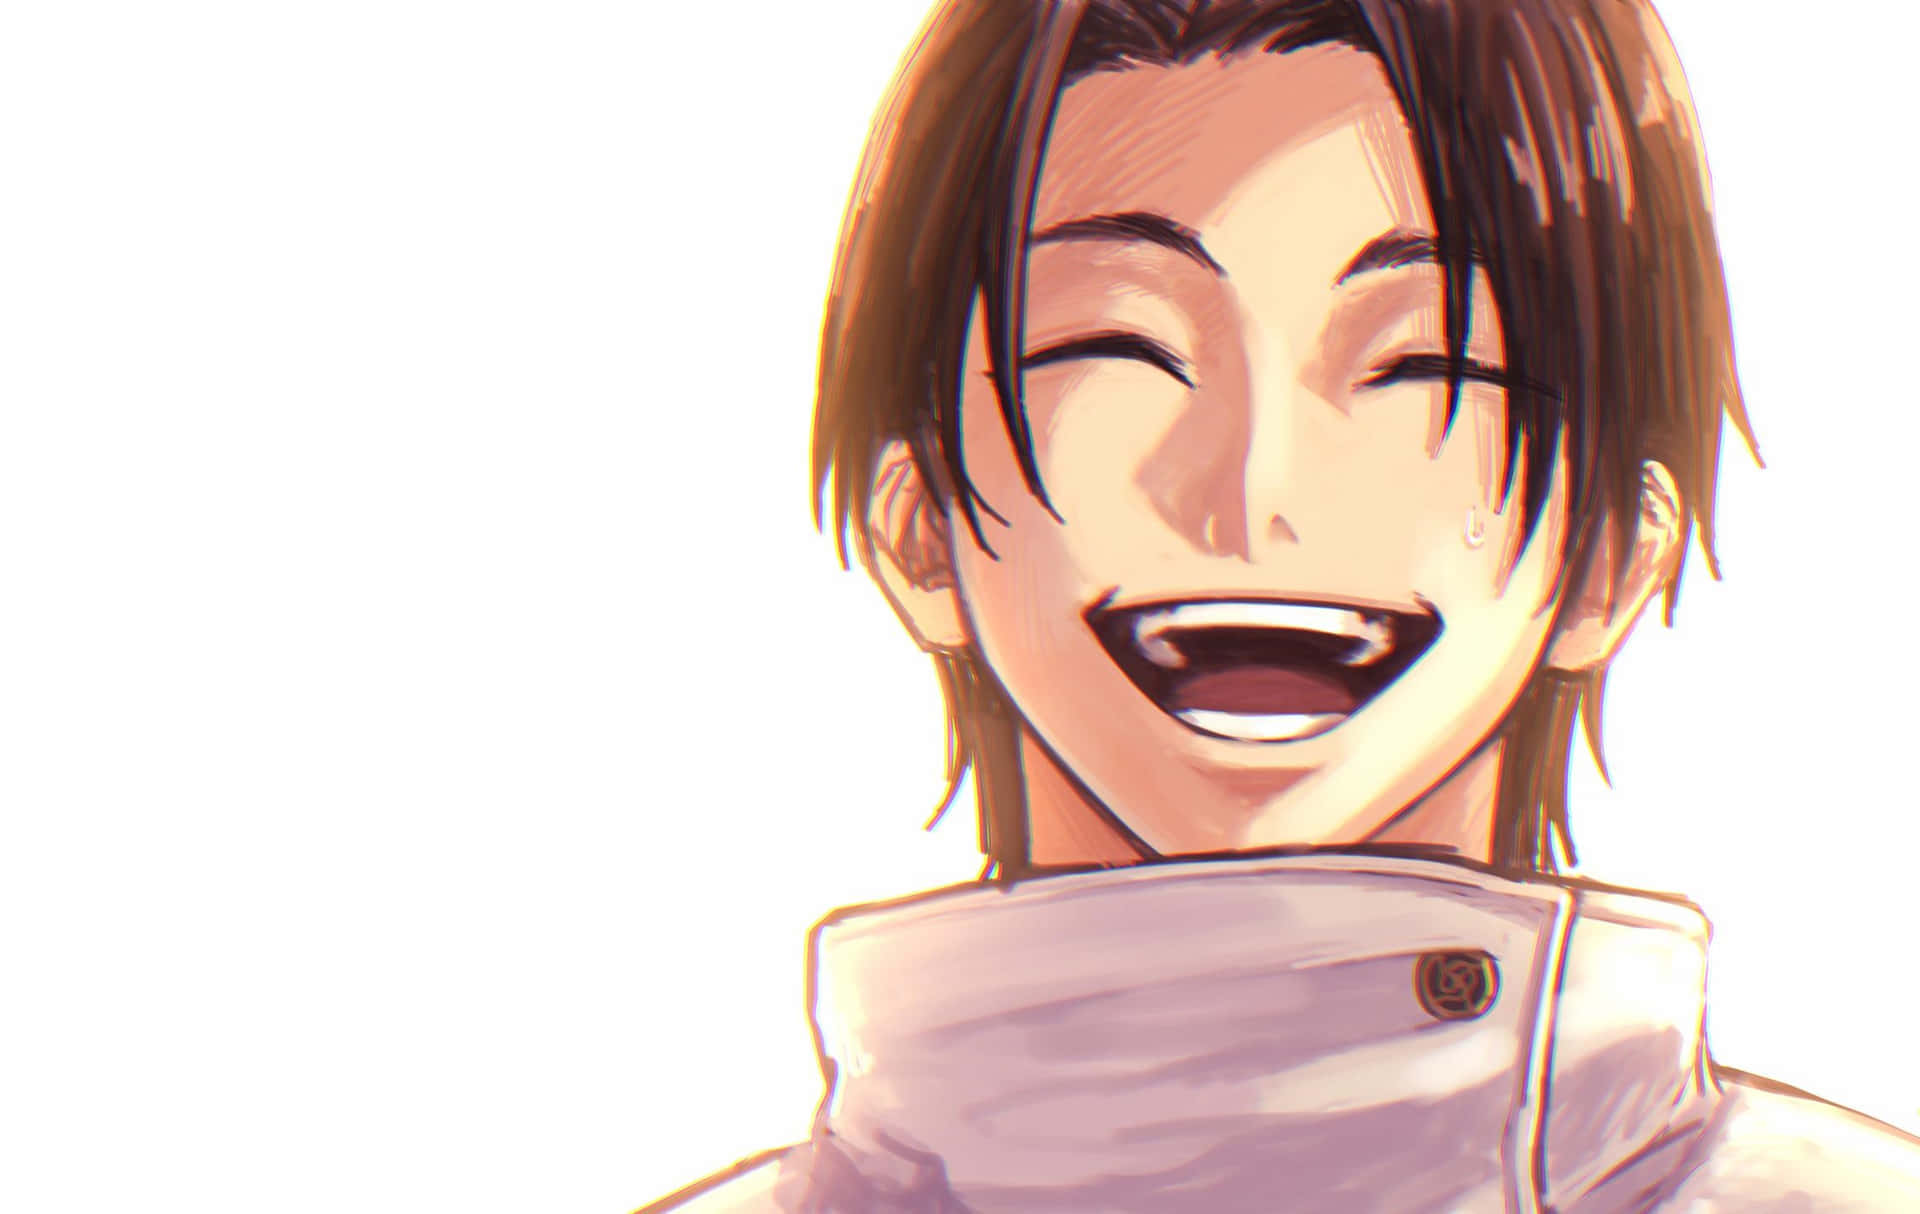 Joyful Anime Character Laughing.jpg Wallpaper